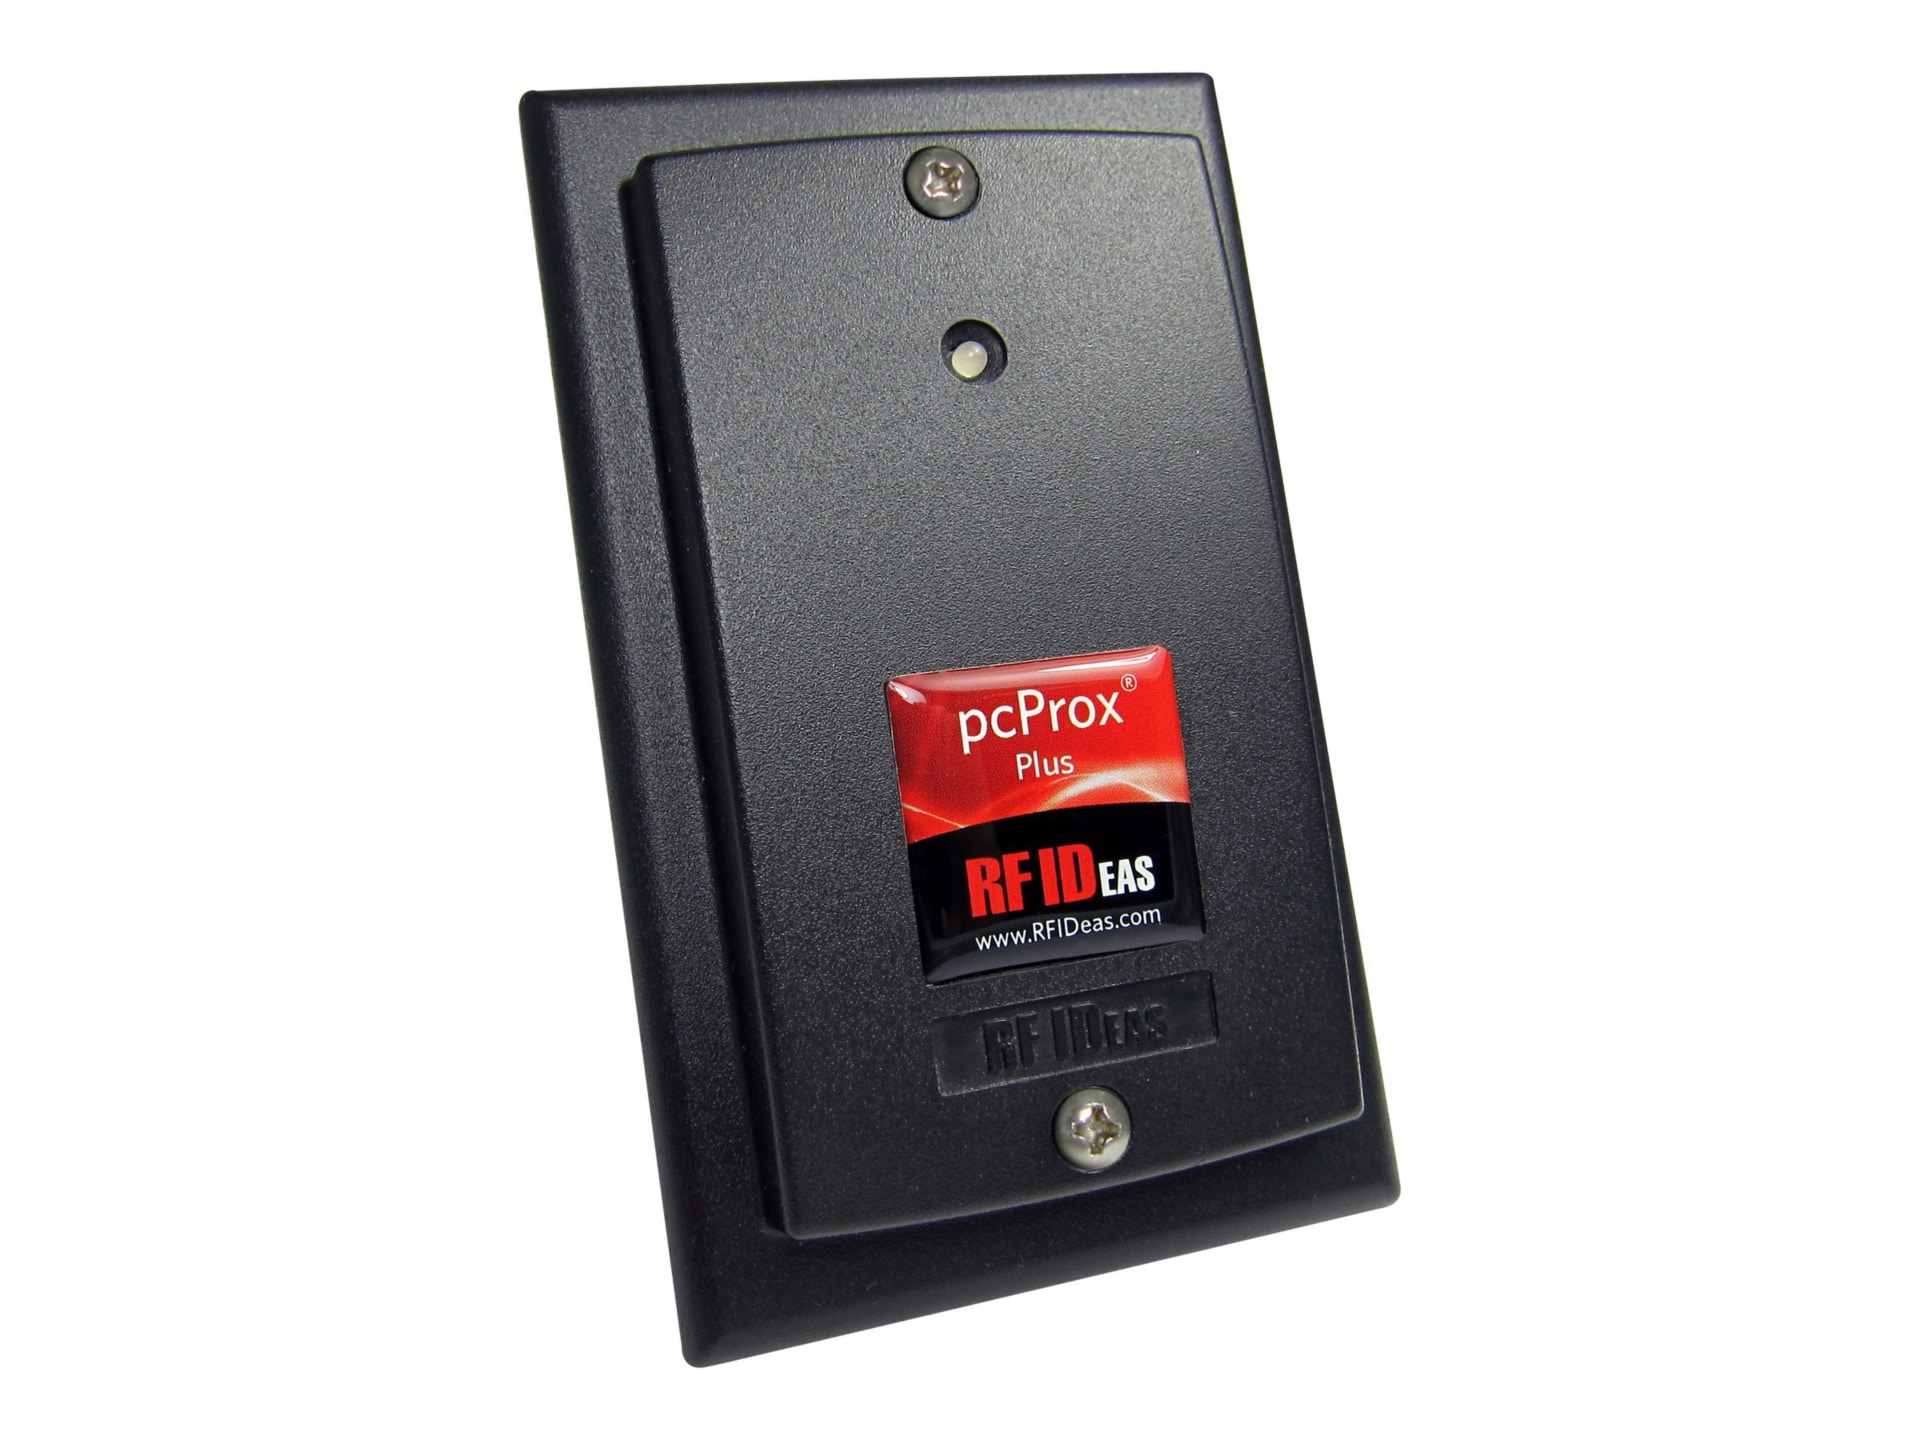 rf IDEAS WAVE ID Playback MIFARE Black Surface Mount Reader - RF proximity reader - USB